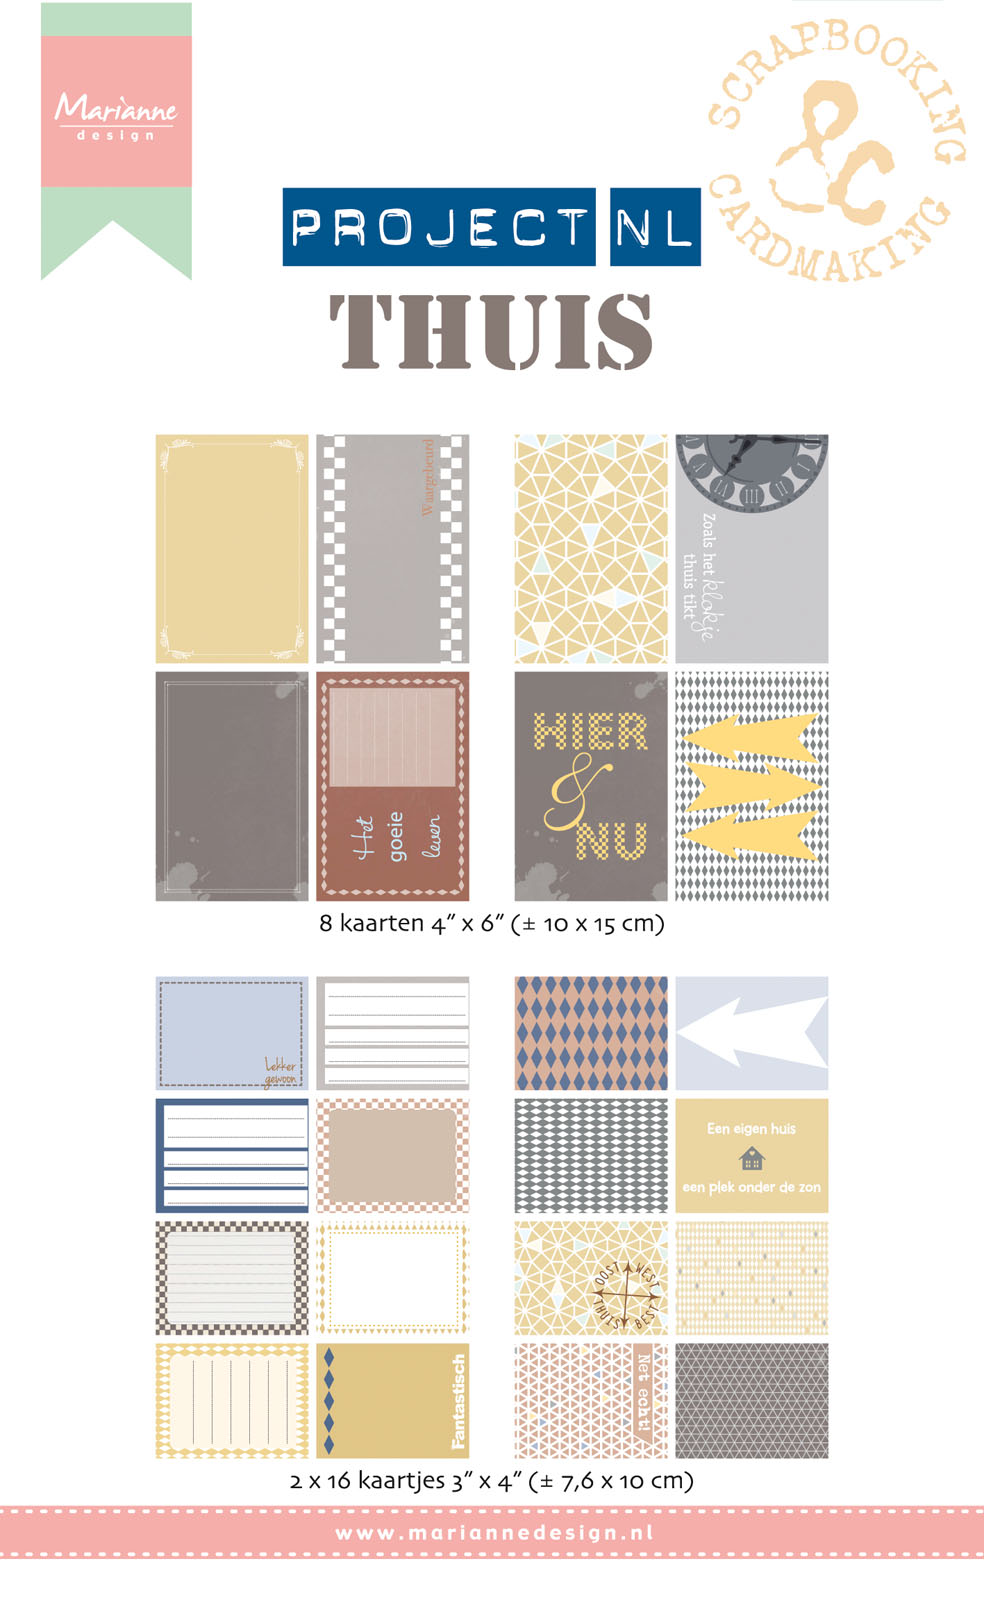 Marianne Design • Dutch card set Project NL "Thuis"